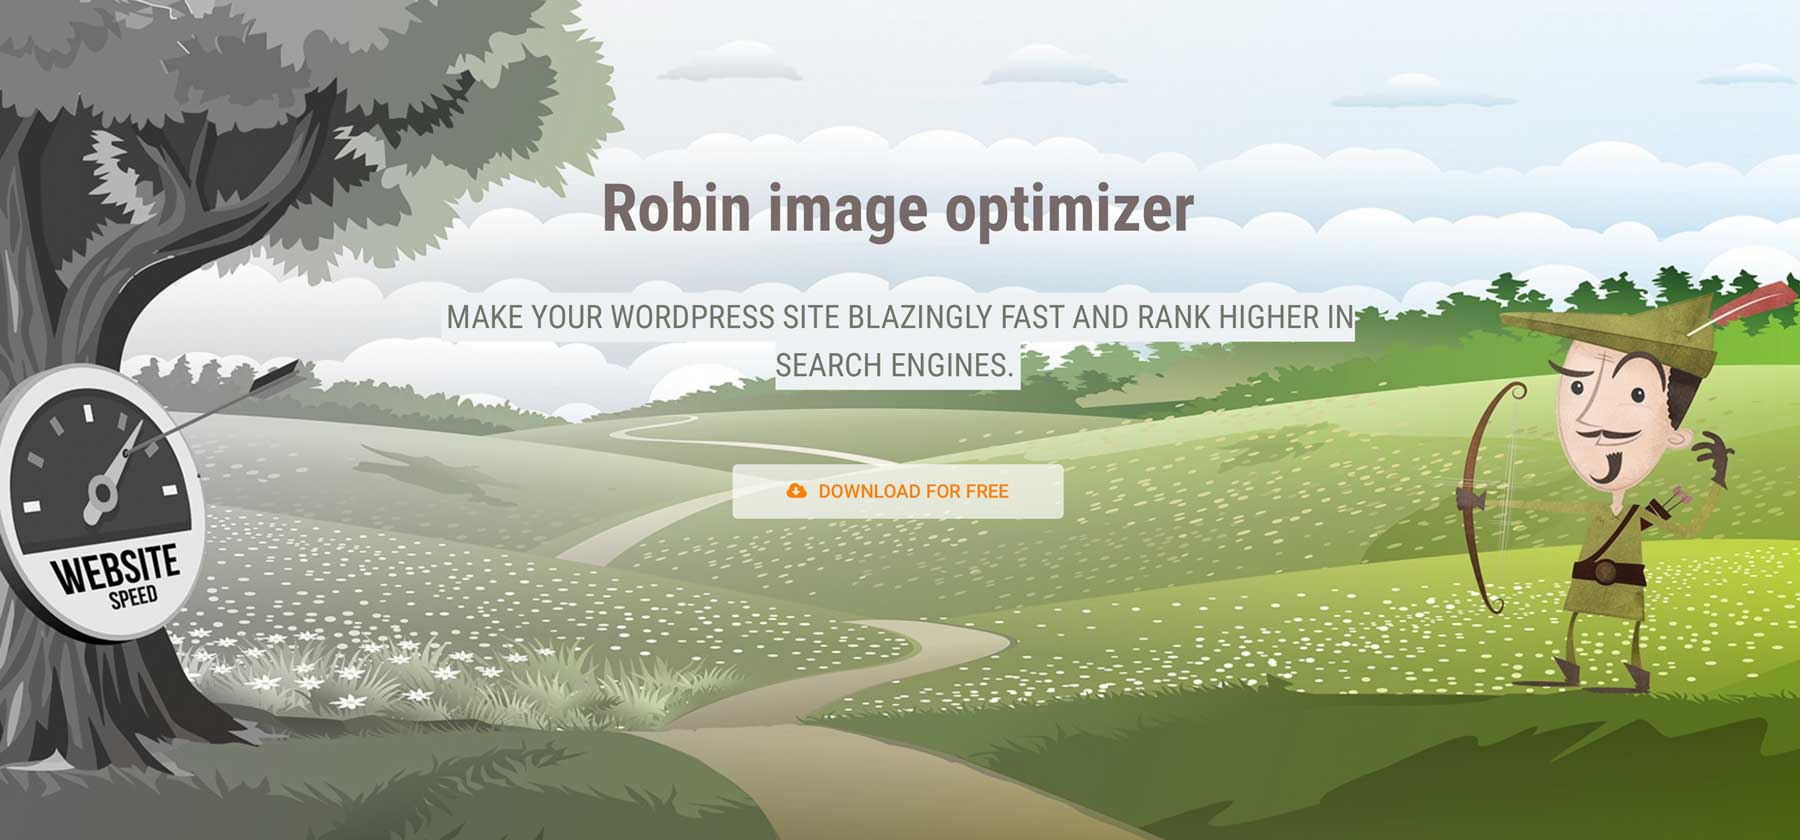 The Robin Image Optimizer plugin